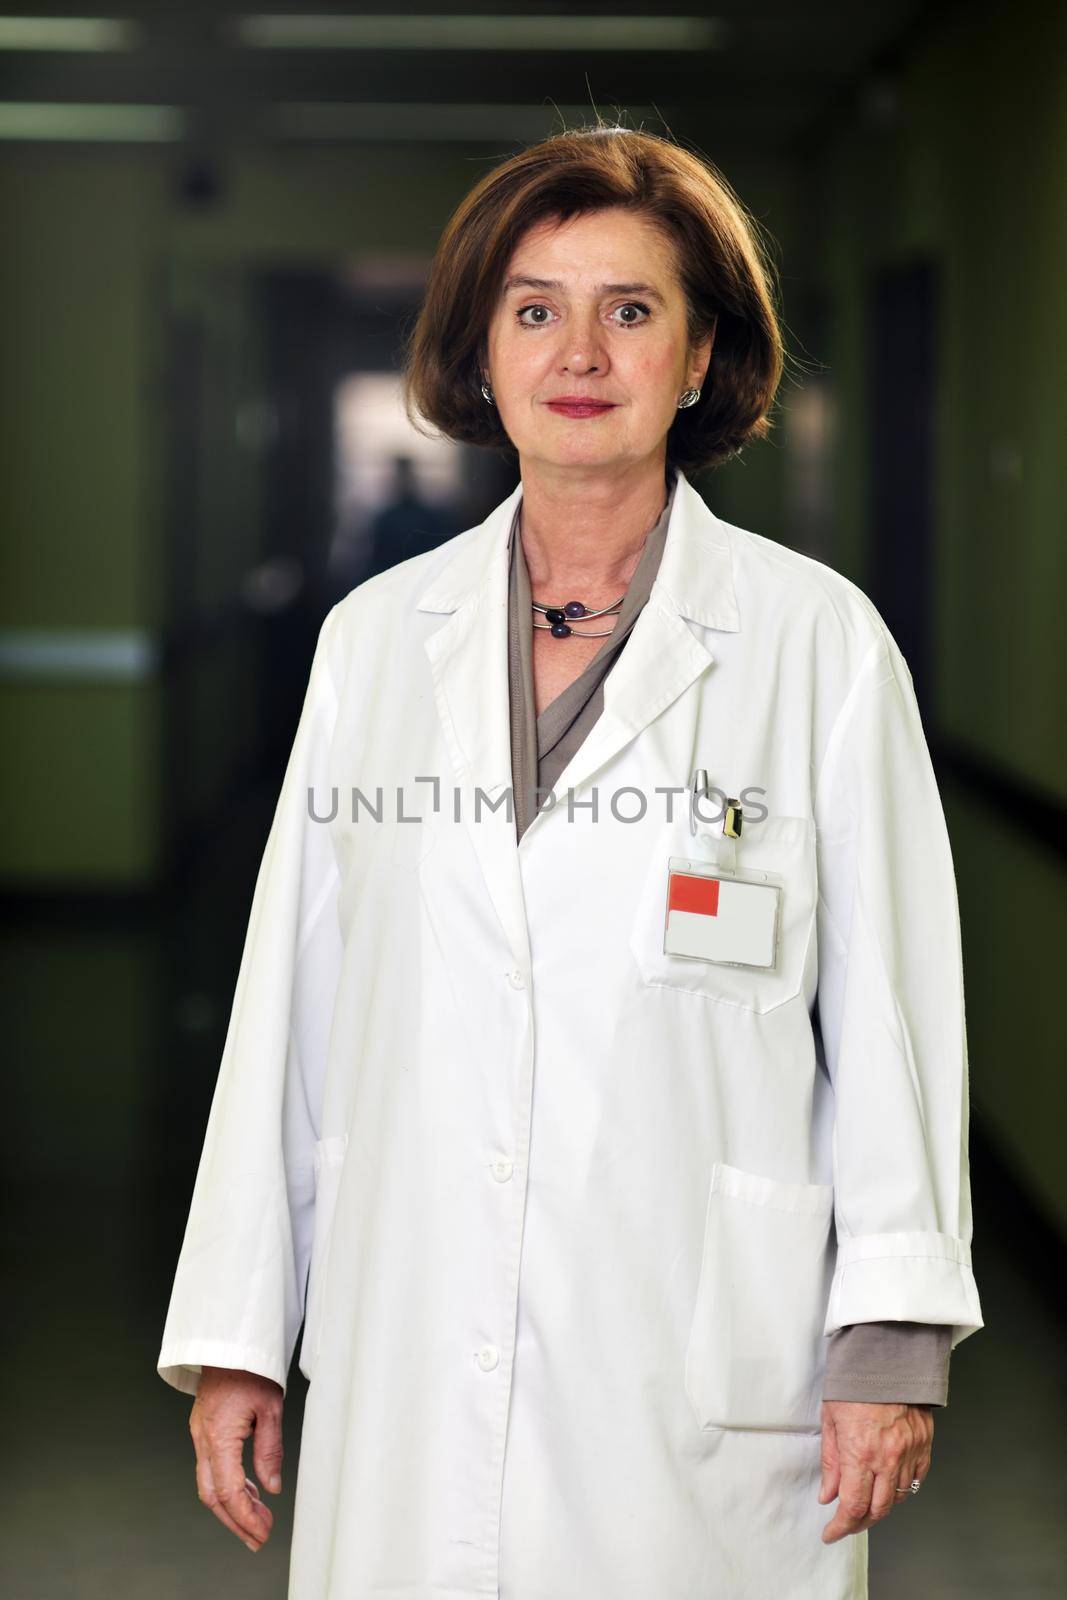 medical woman portrait by dotshock